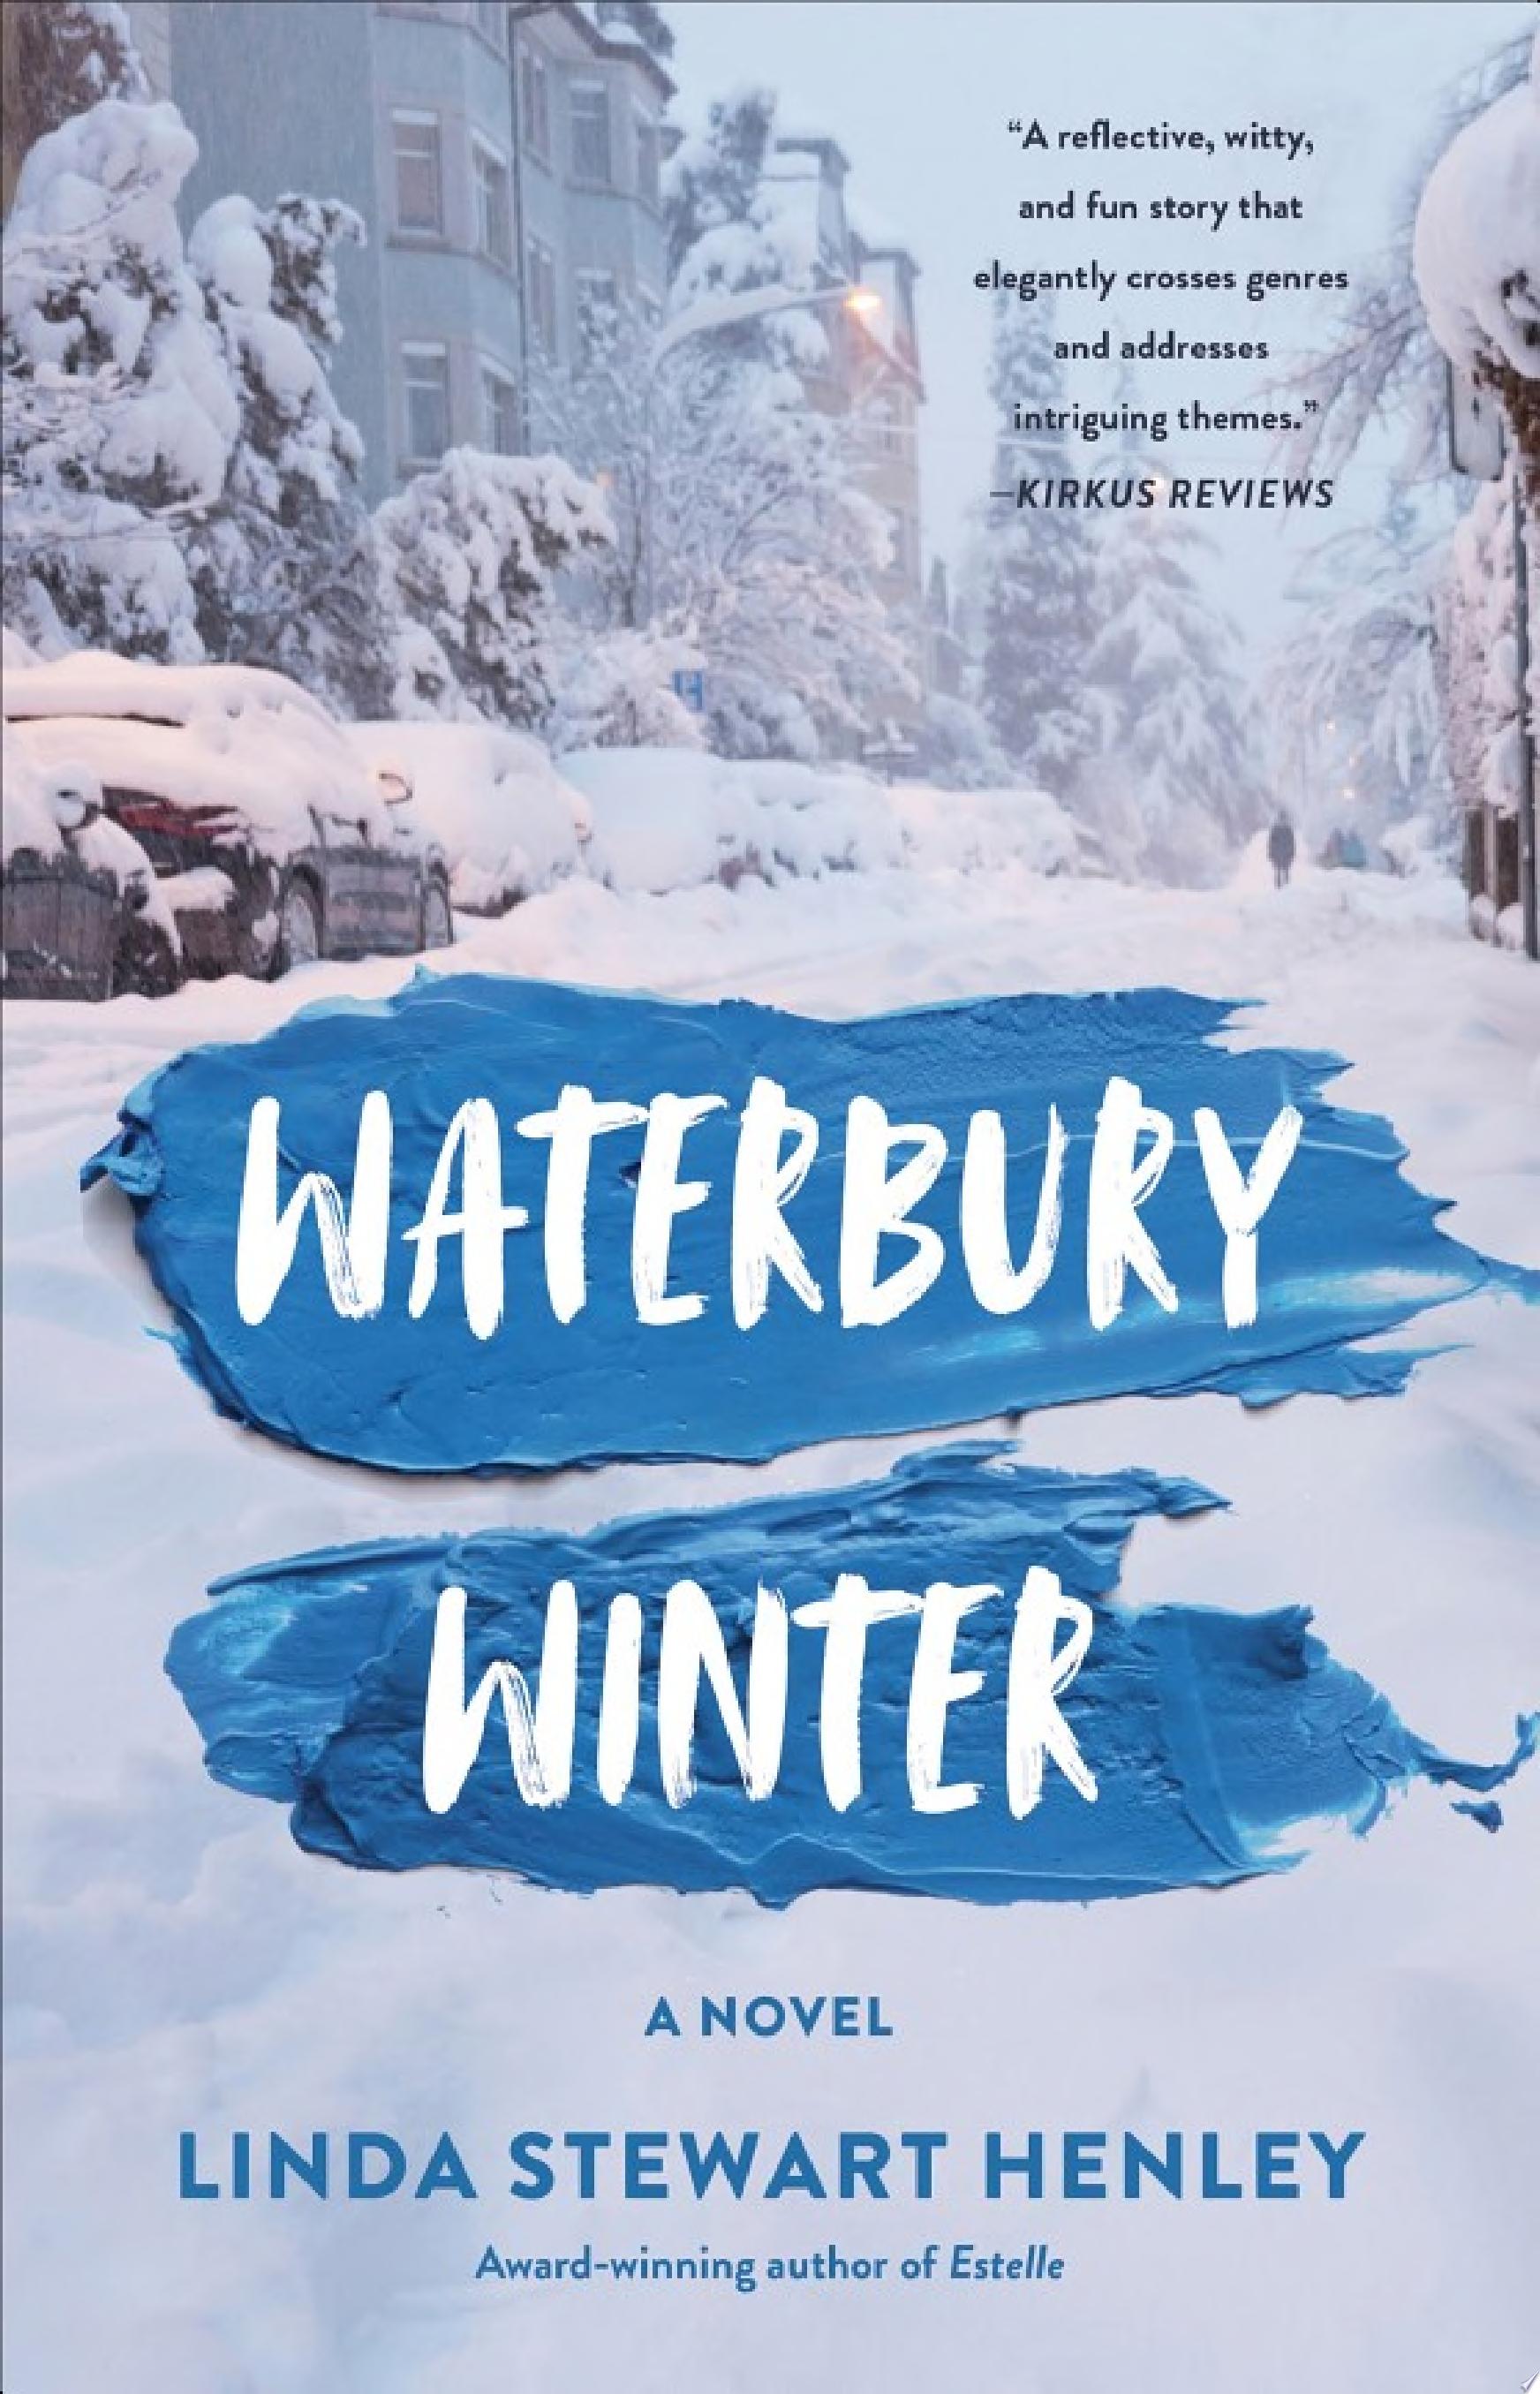 Image for "Waterbury Winter"